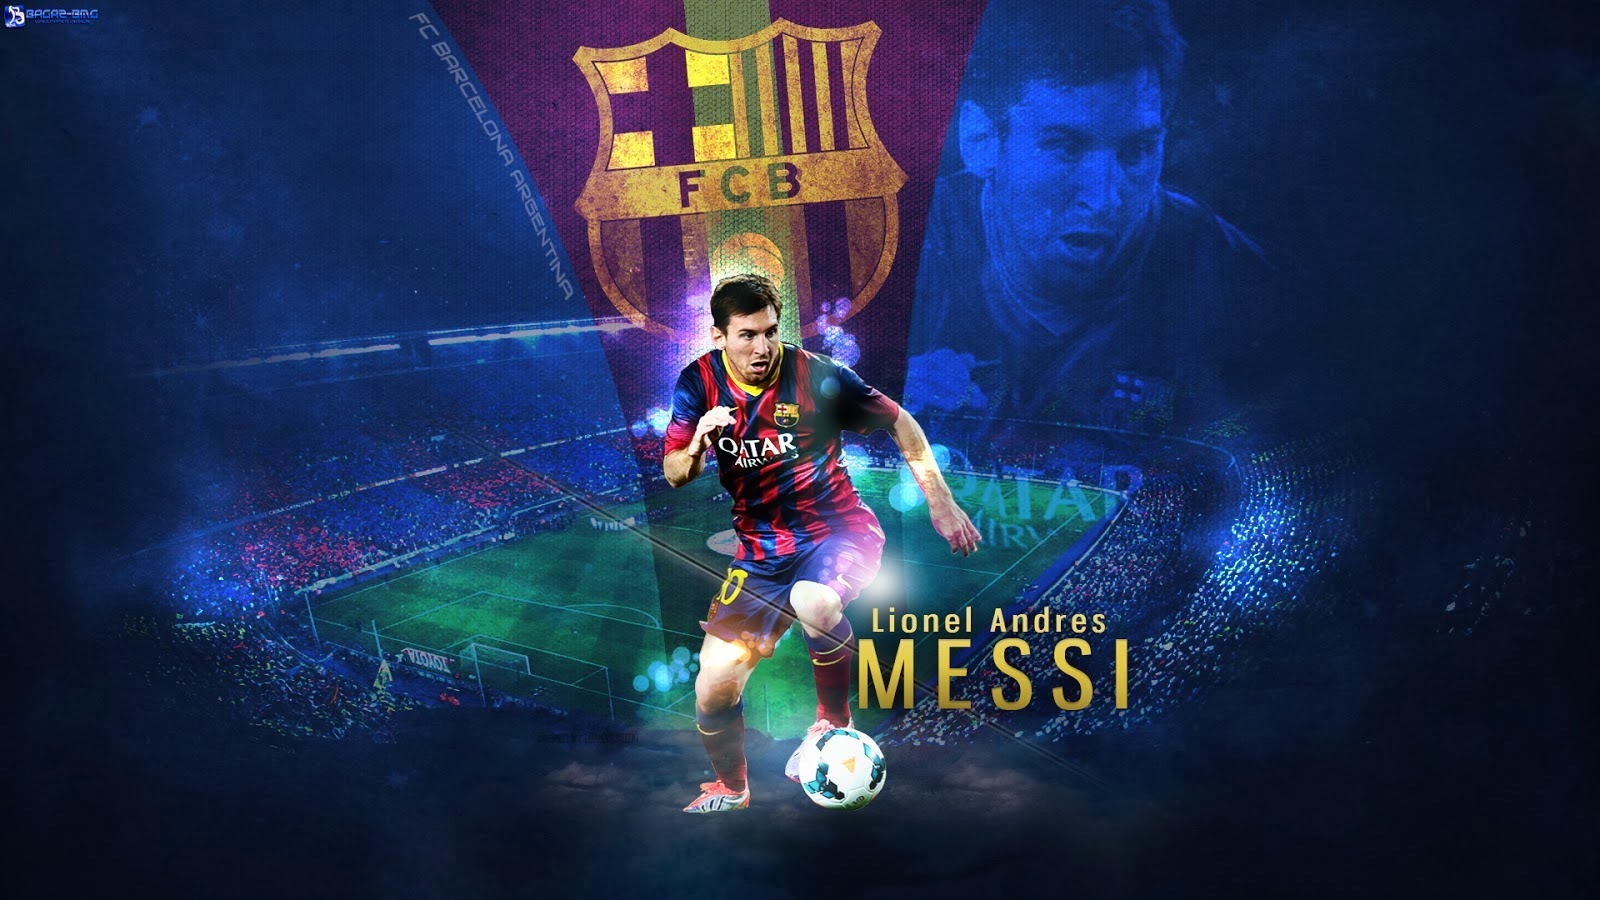 Lionel Messi 20 alucinantes fondos de pantalla para tu